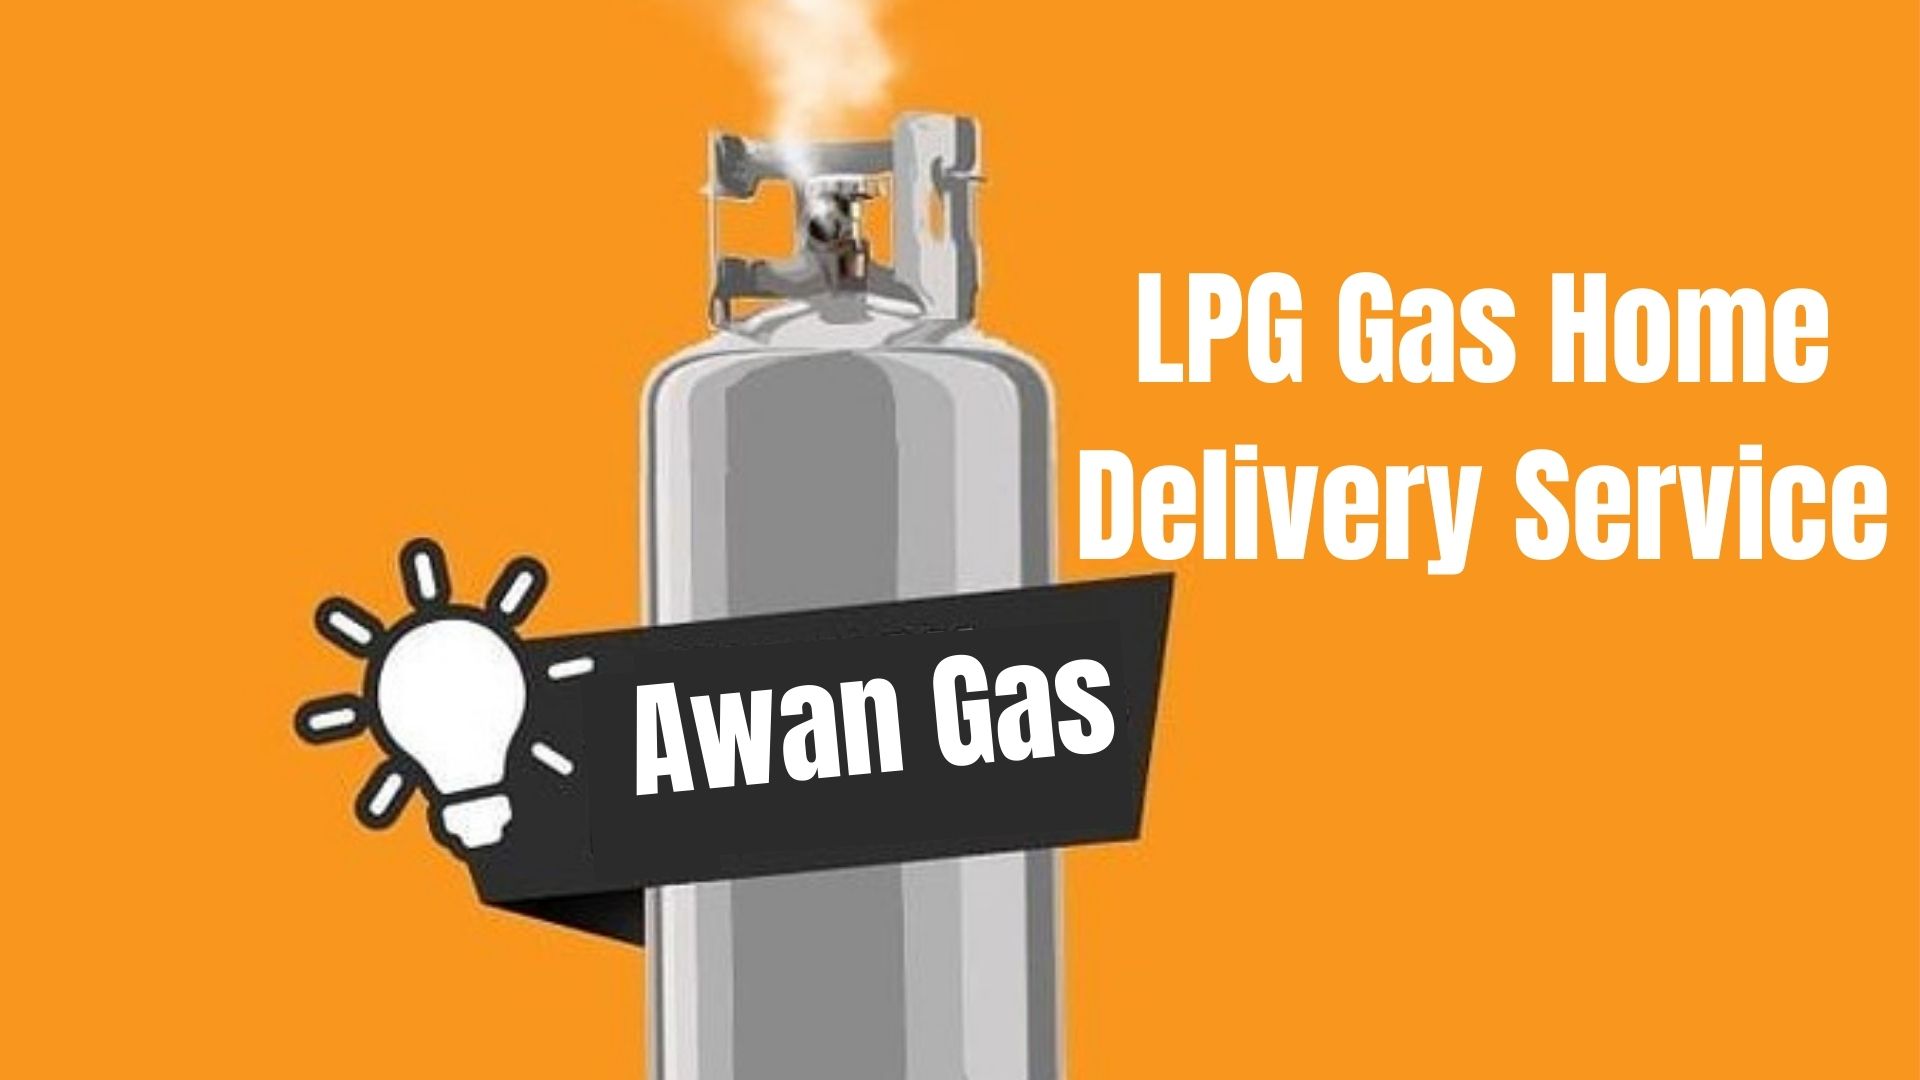 LPG gas provider